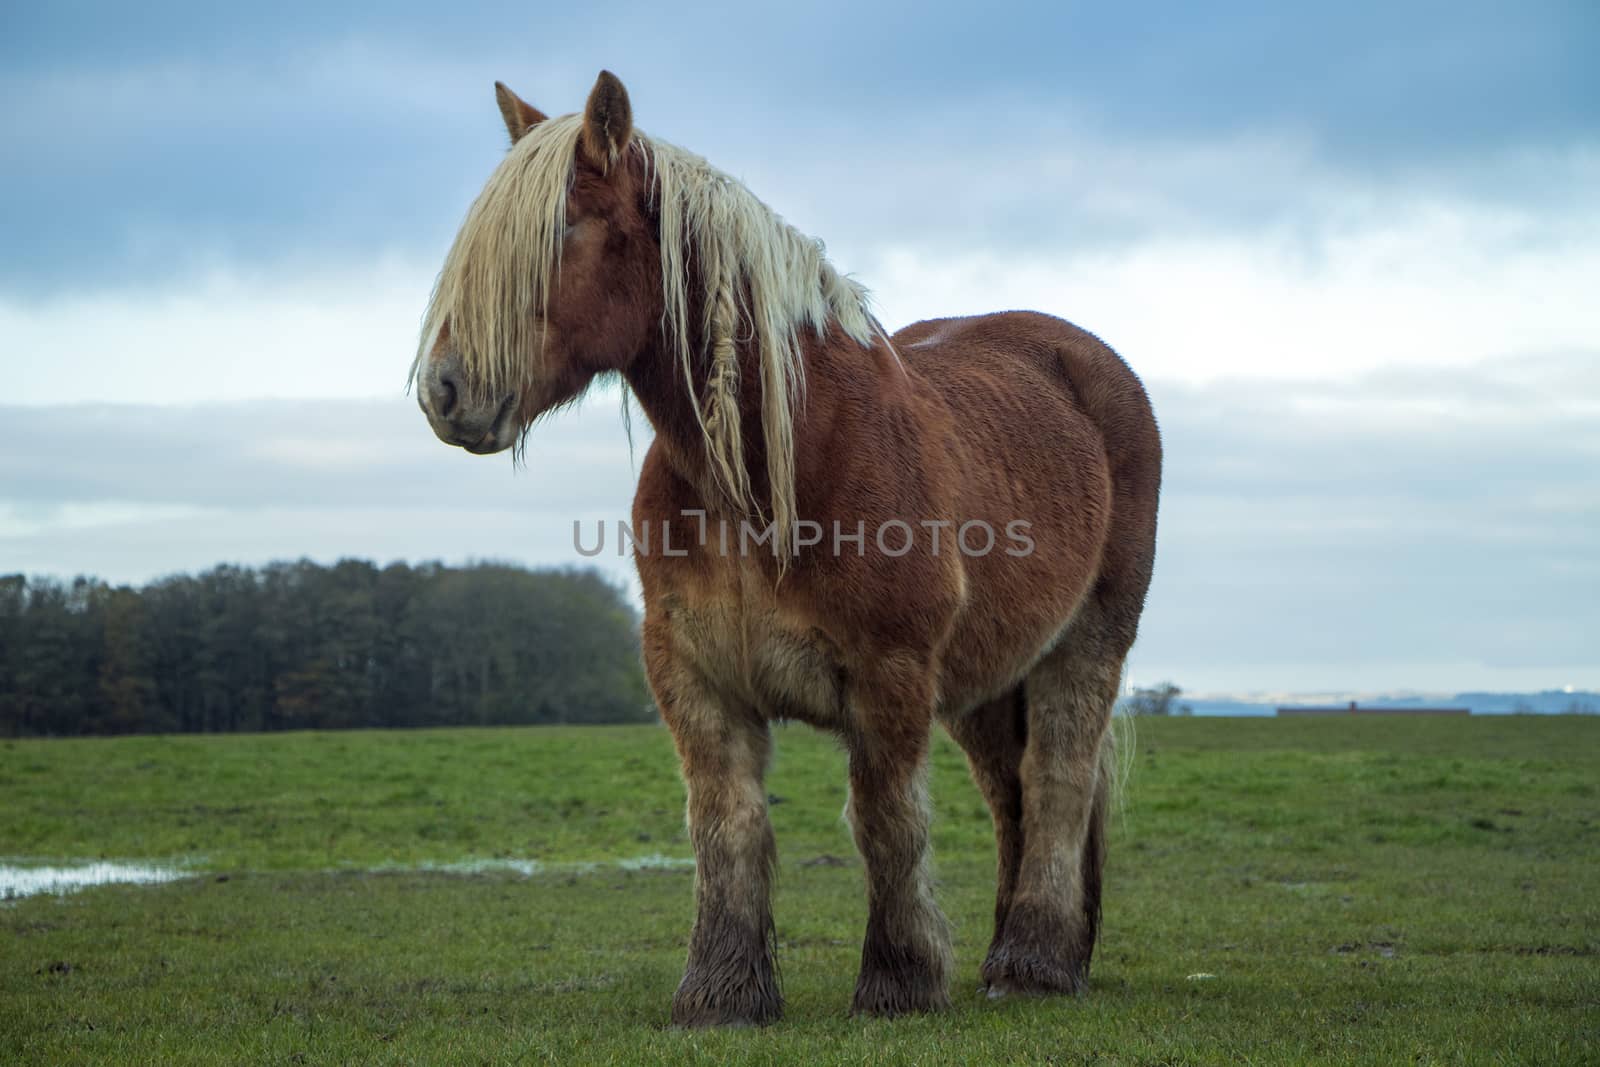 Jutland Horse, Equus ferus caballus by Mads_Hjorth_Jakobsen